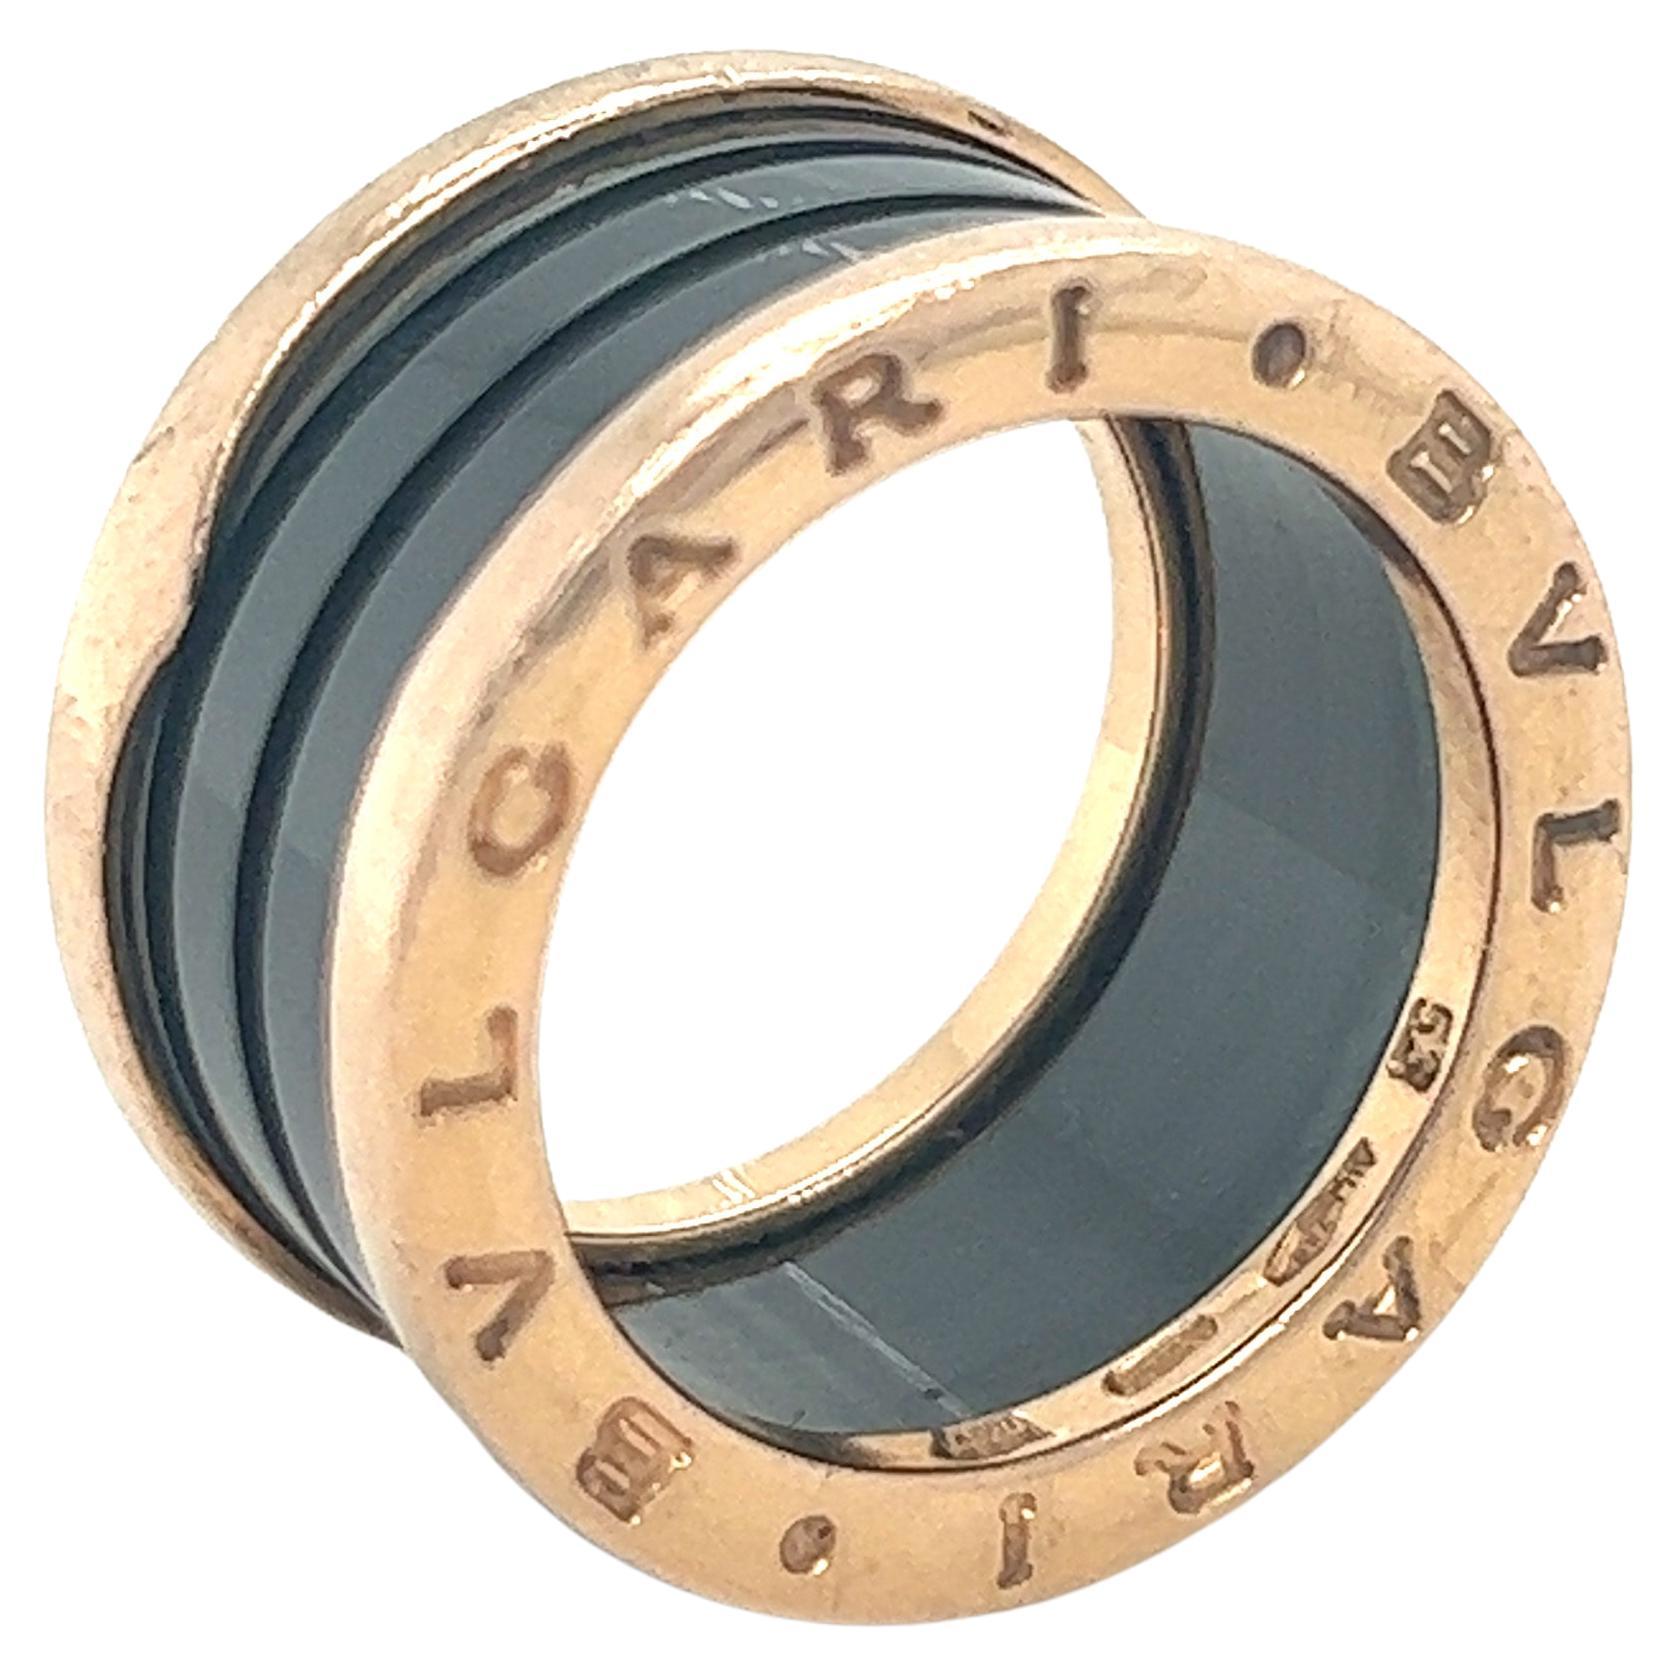 Bulgari B-Zero rose gold black ceramic ring model number 346523